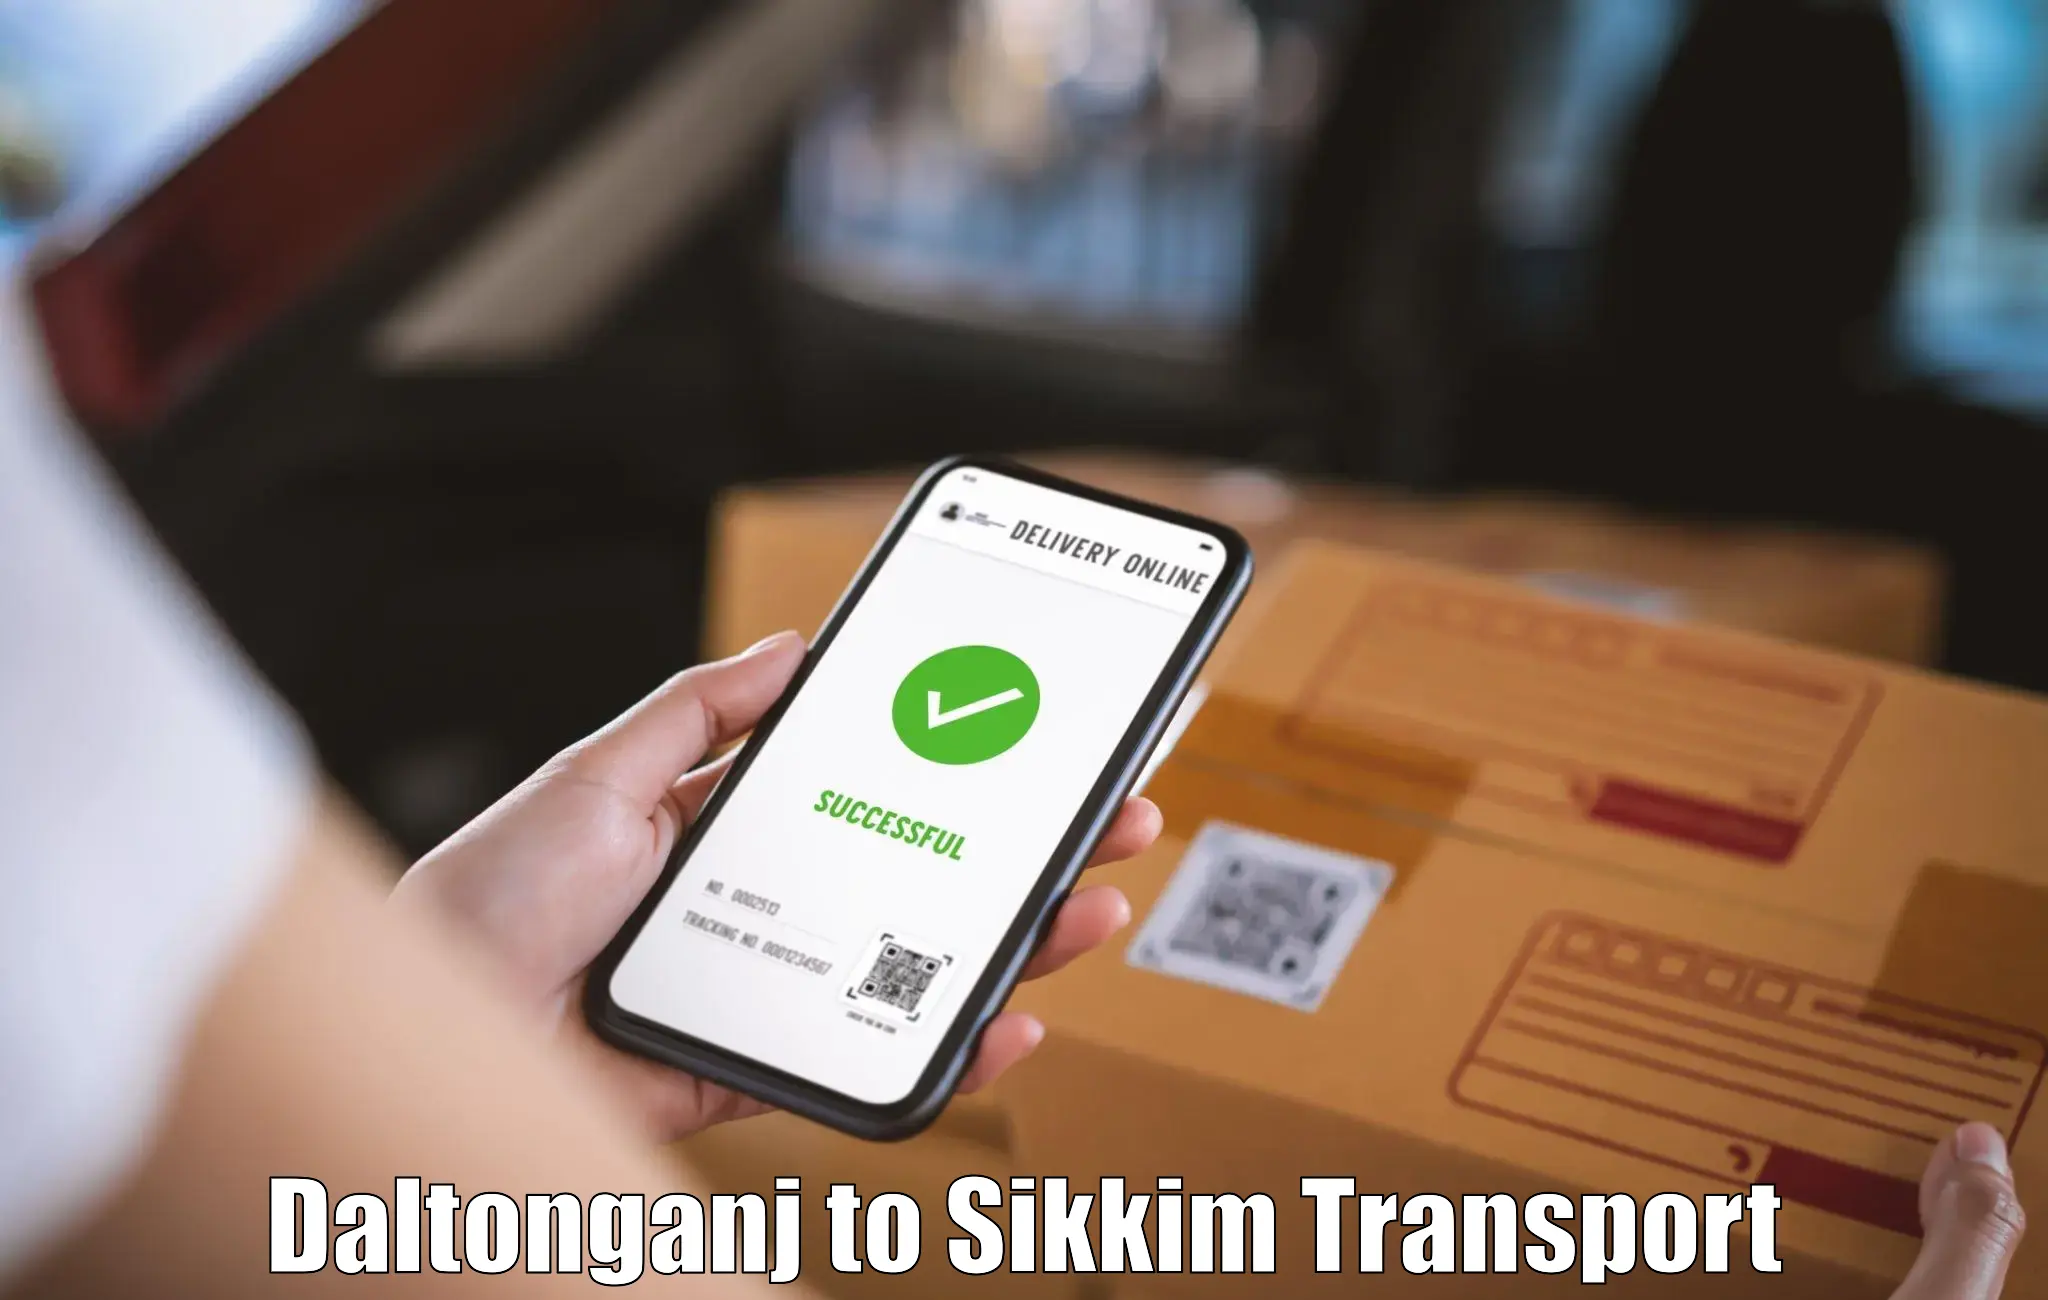 Nationwide transport services Daltonganj to Gangtok